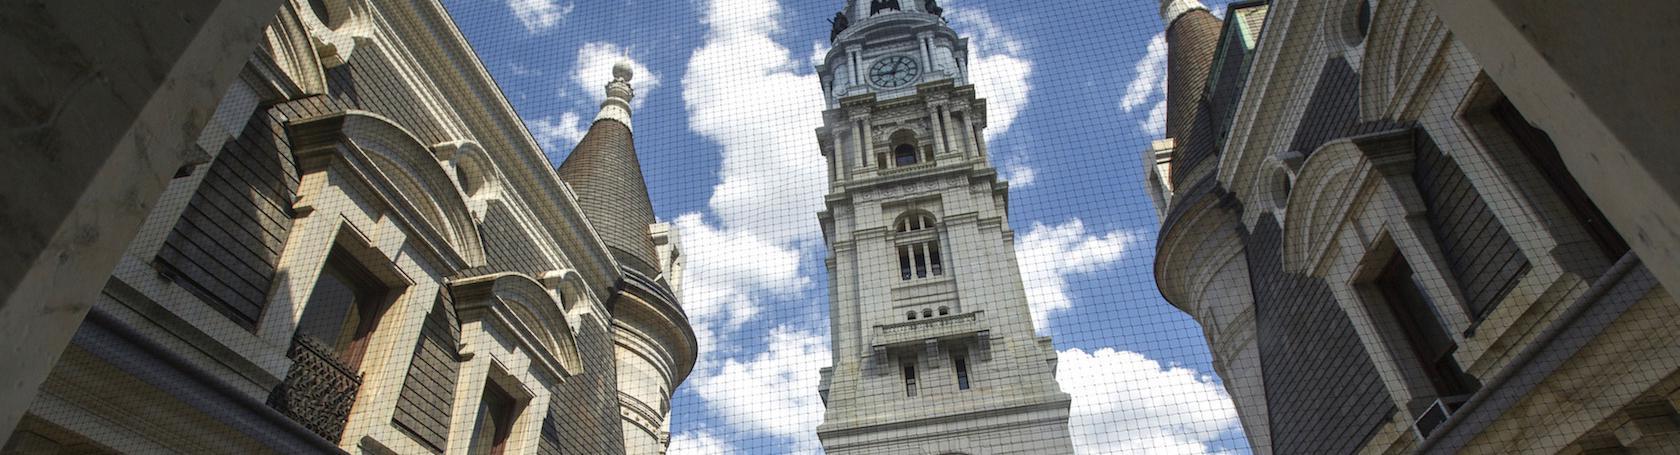 City hall buildings in Philadelphia, PA